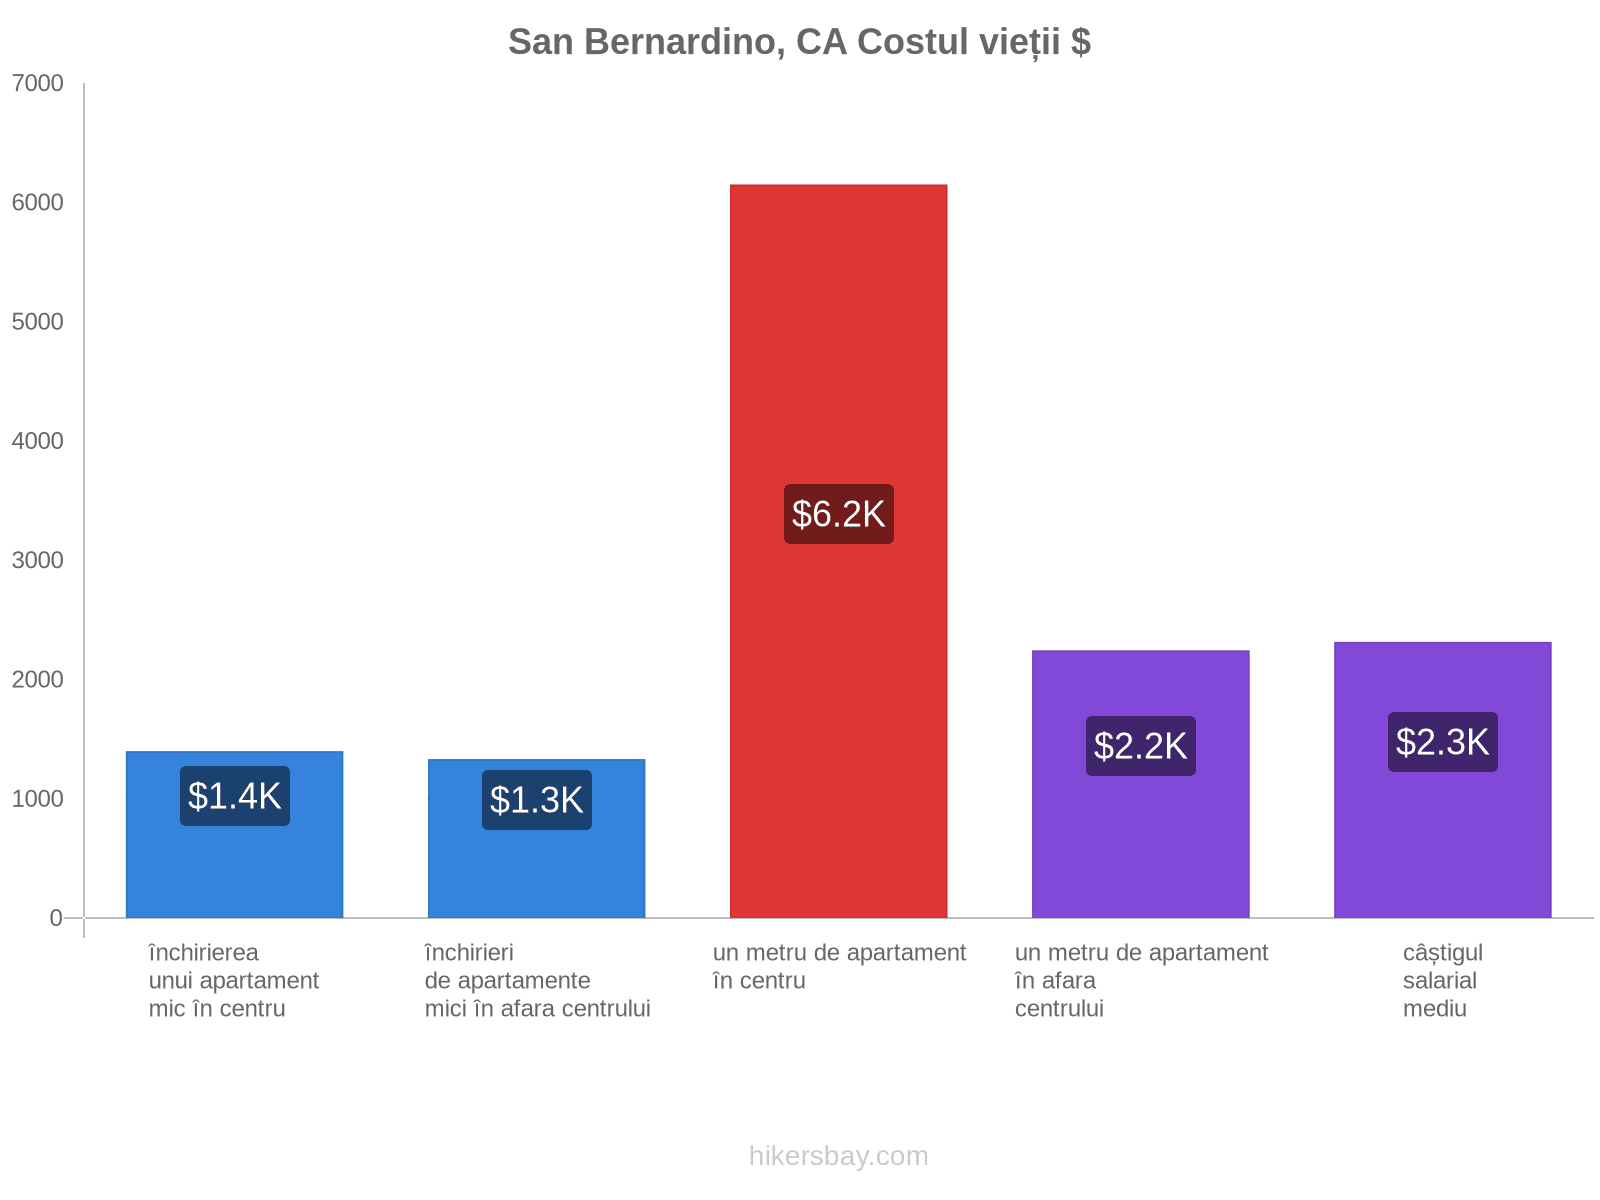 San Bernardino, CA costul vieții hikersbay.com